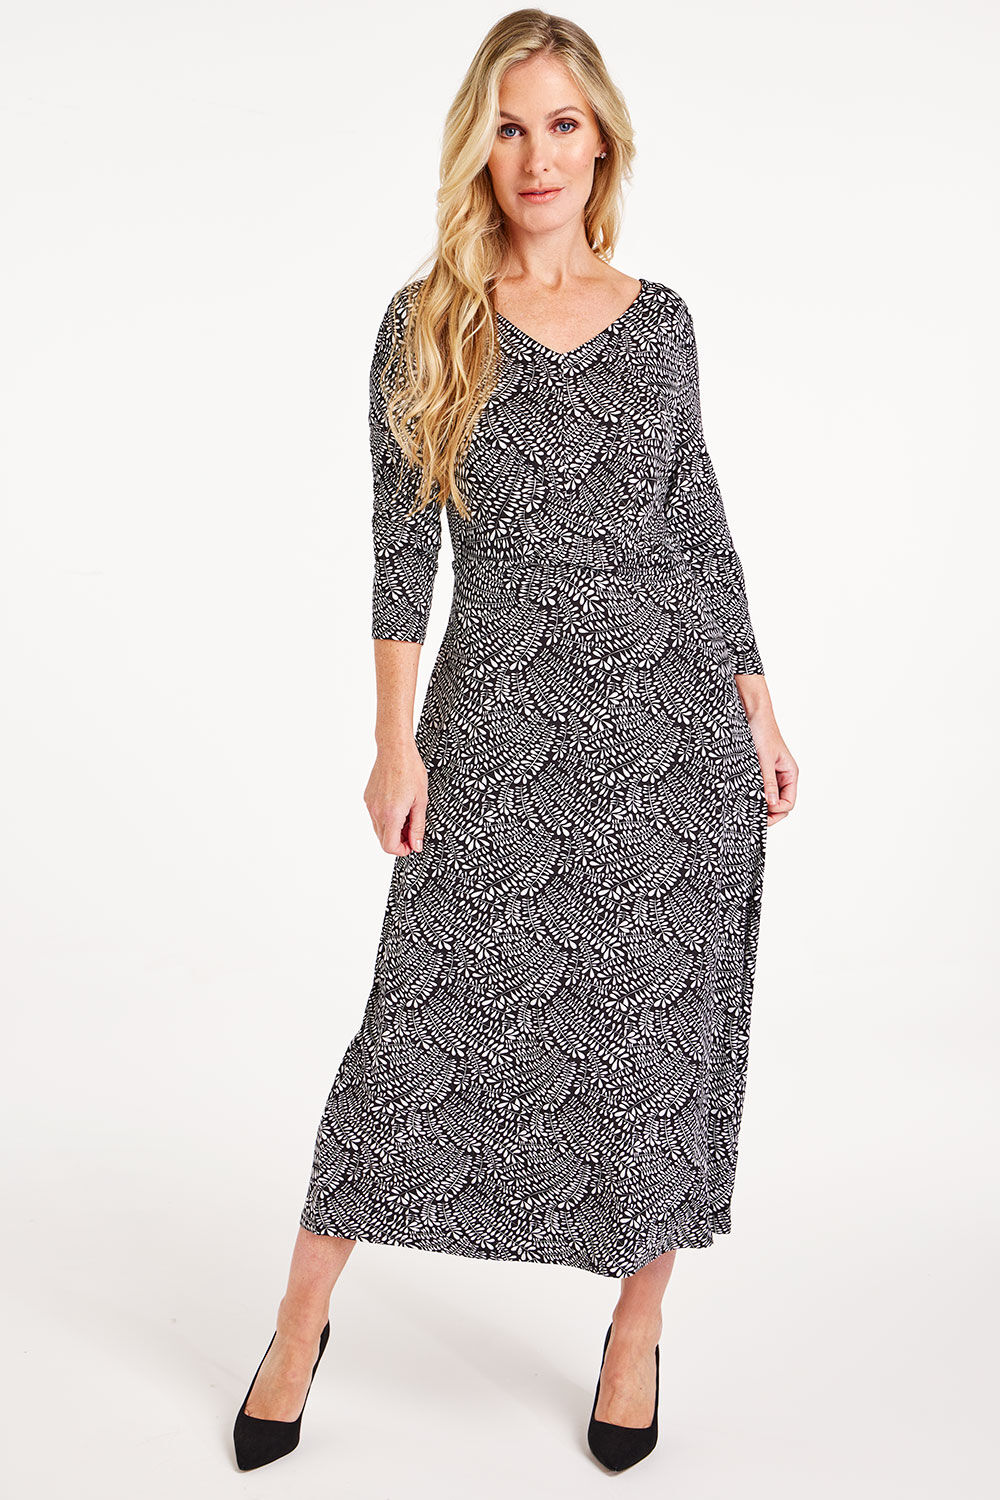 Bonmarche Women’s Black and White Viscose Leaf Print Sprig Twist Front Jersey Dress, Size: 16